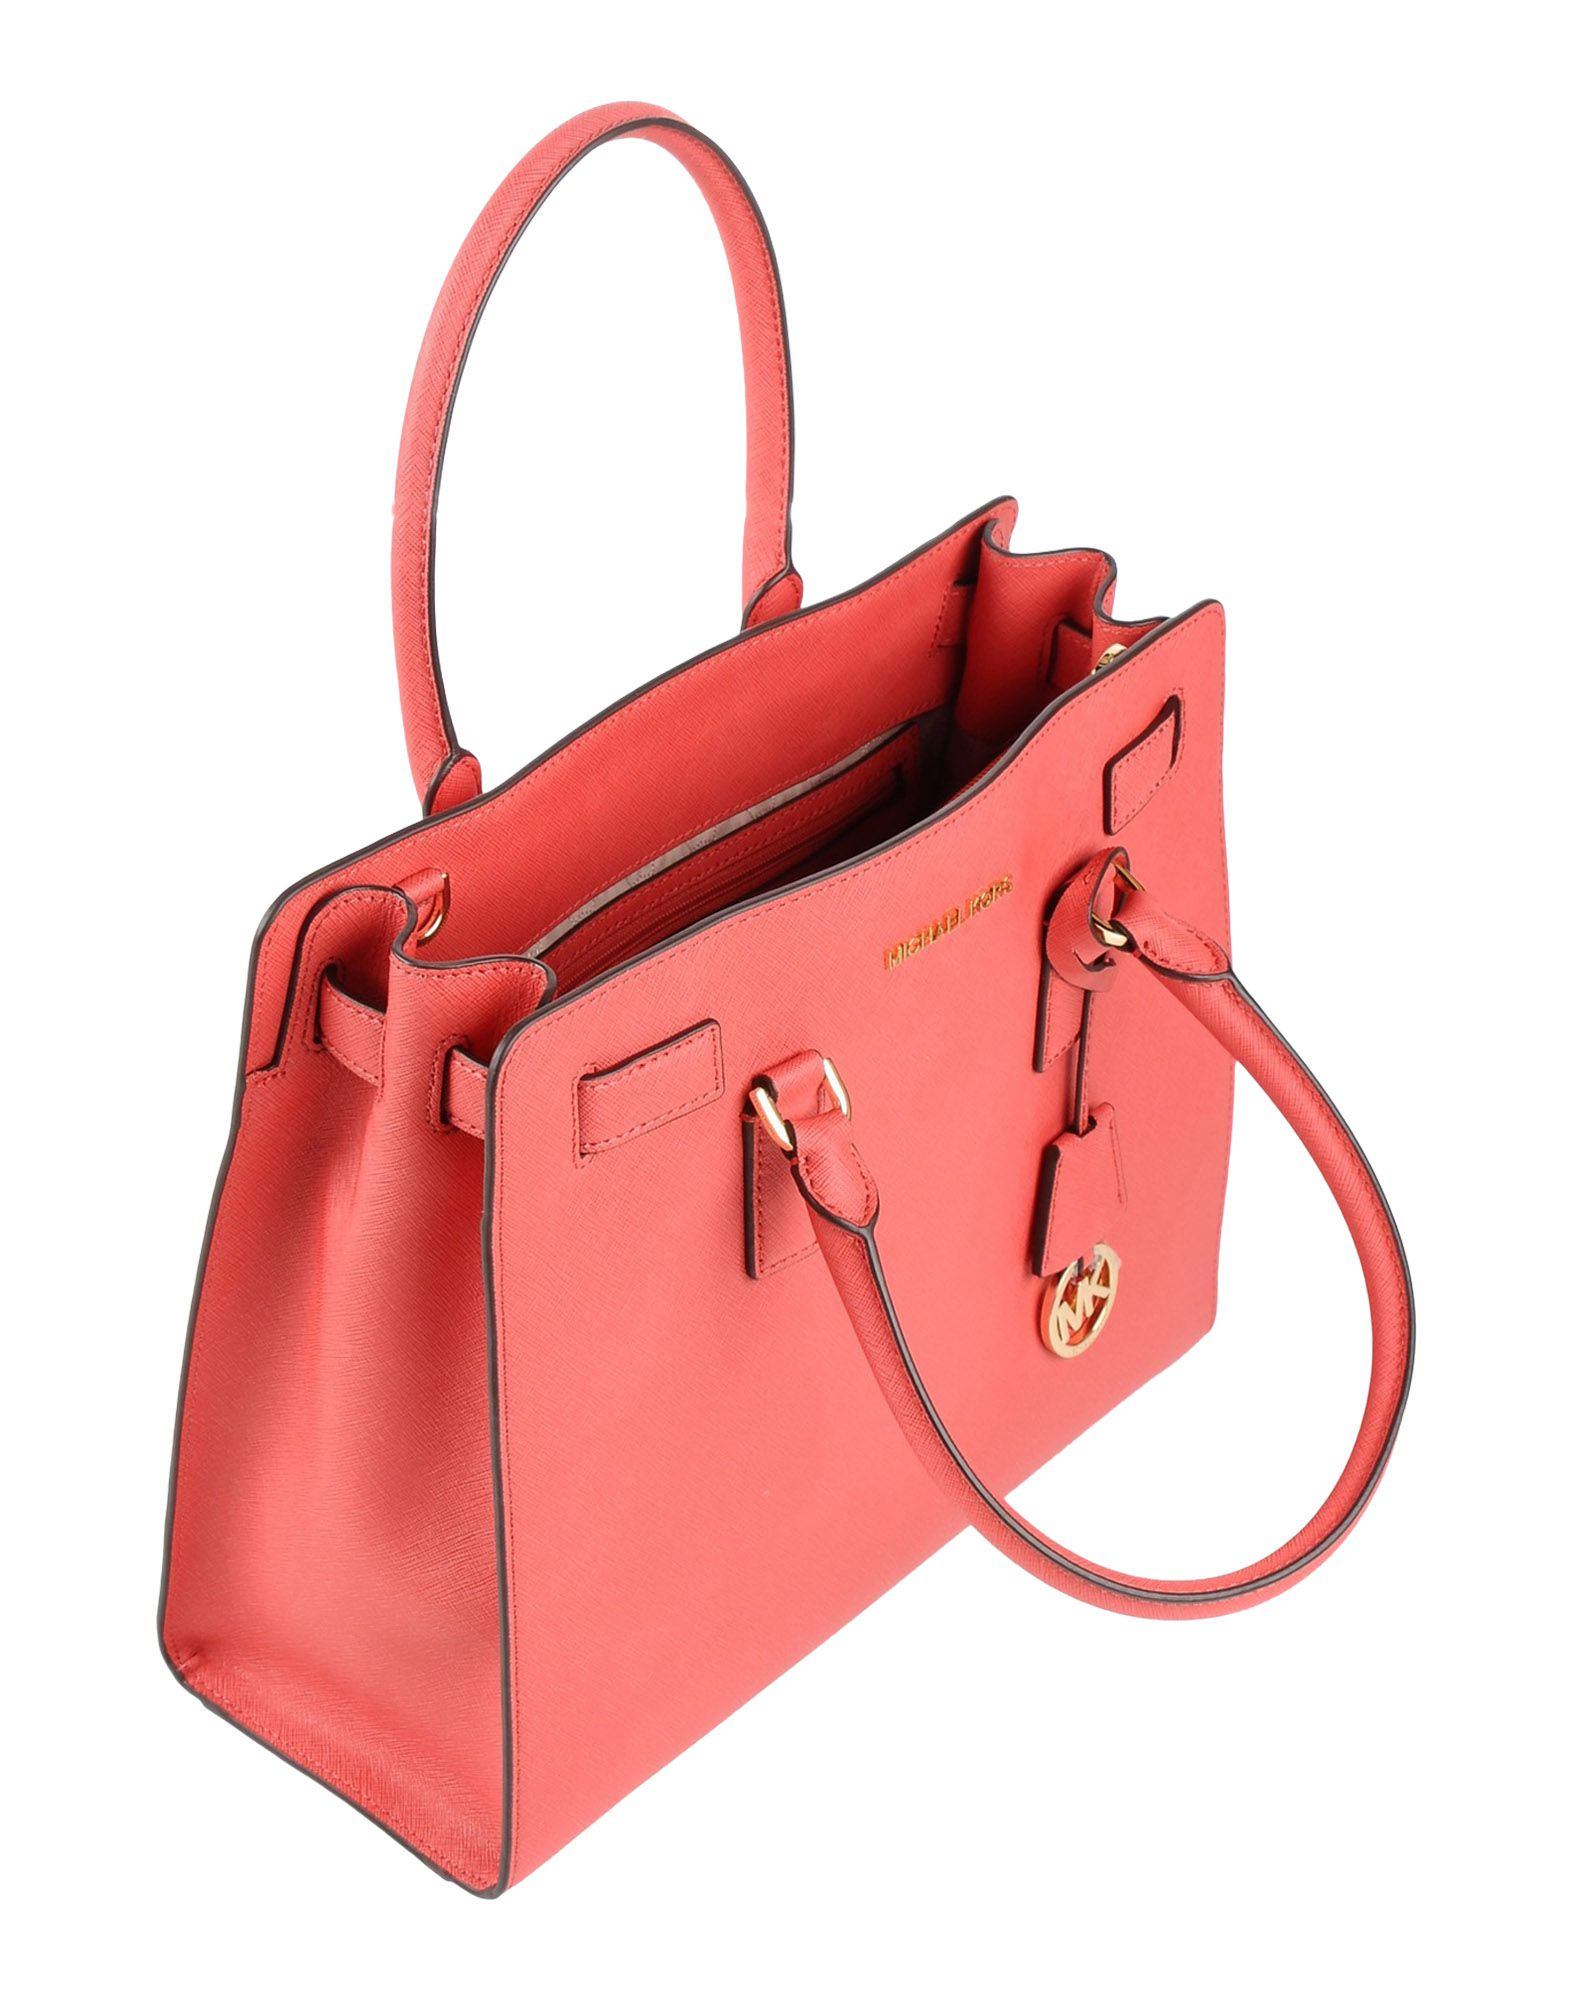 Michael Kors Pink Handbags